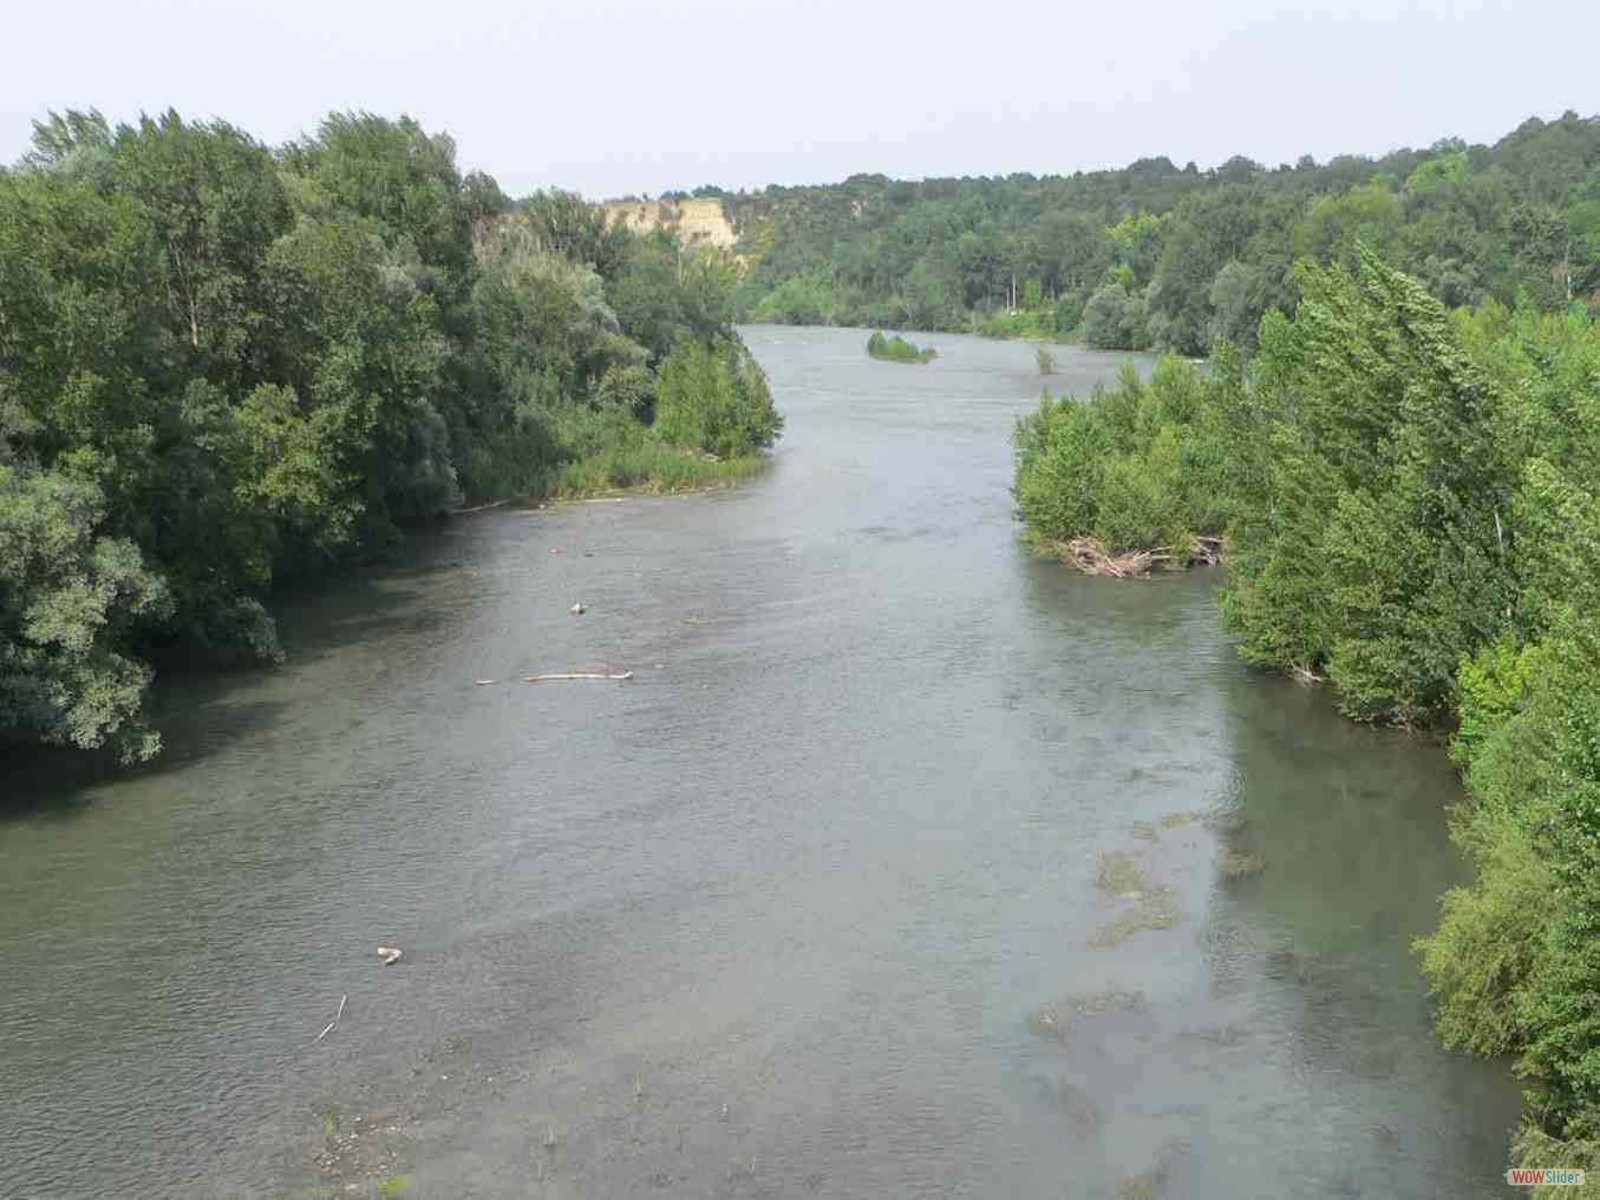 The Garonne at muret